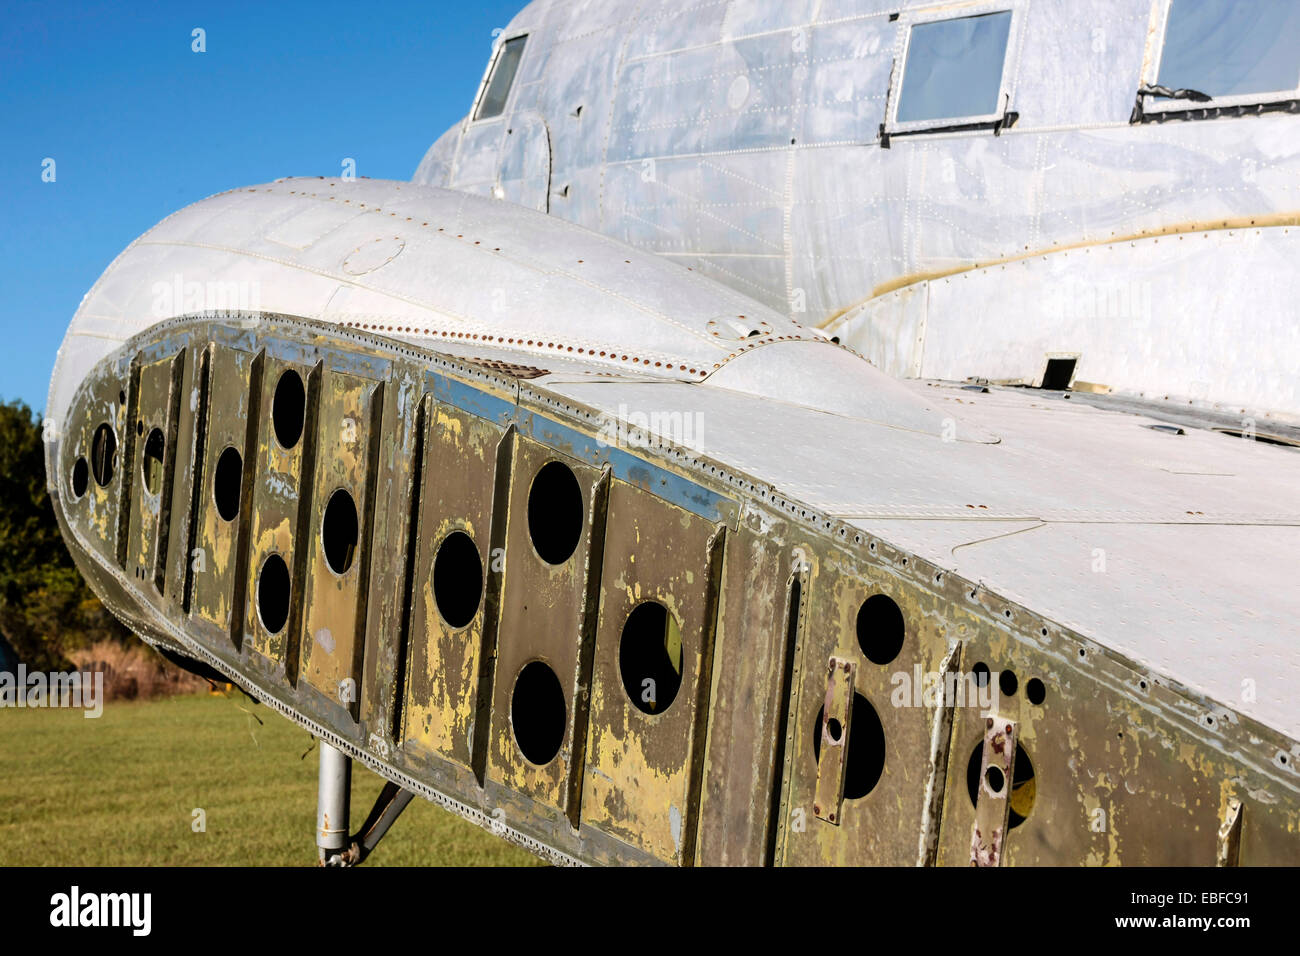 A wingless Douglas DC-3 at an aviation junkyard in Florida Stock Photo